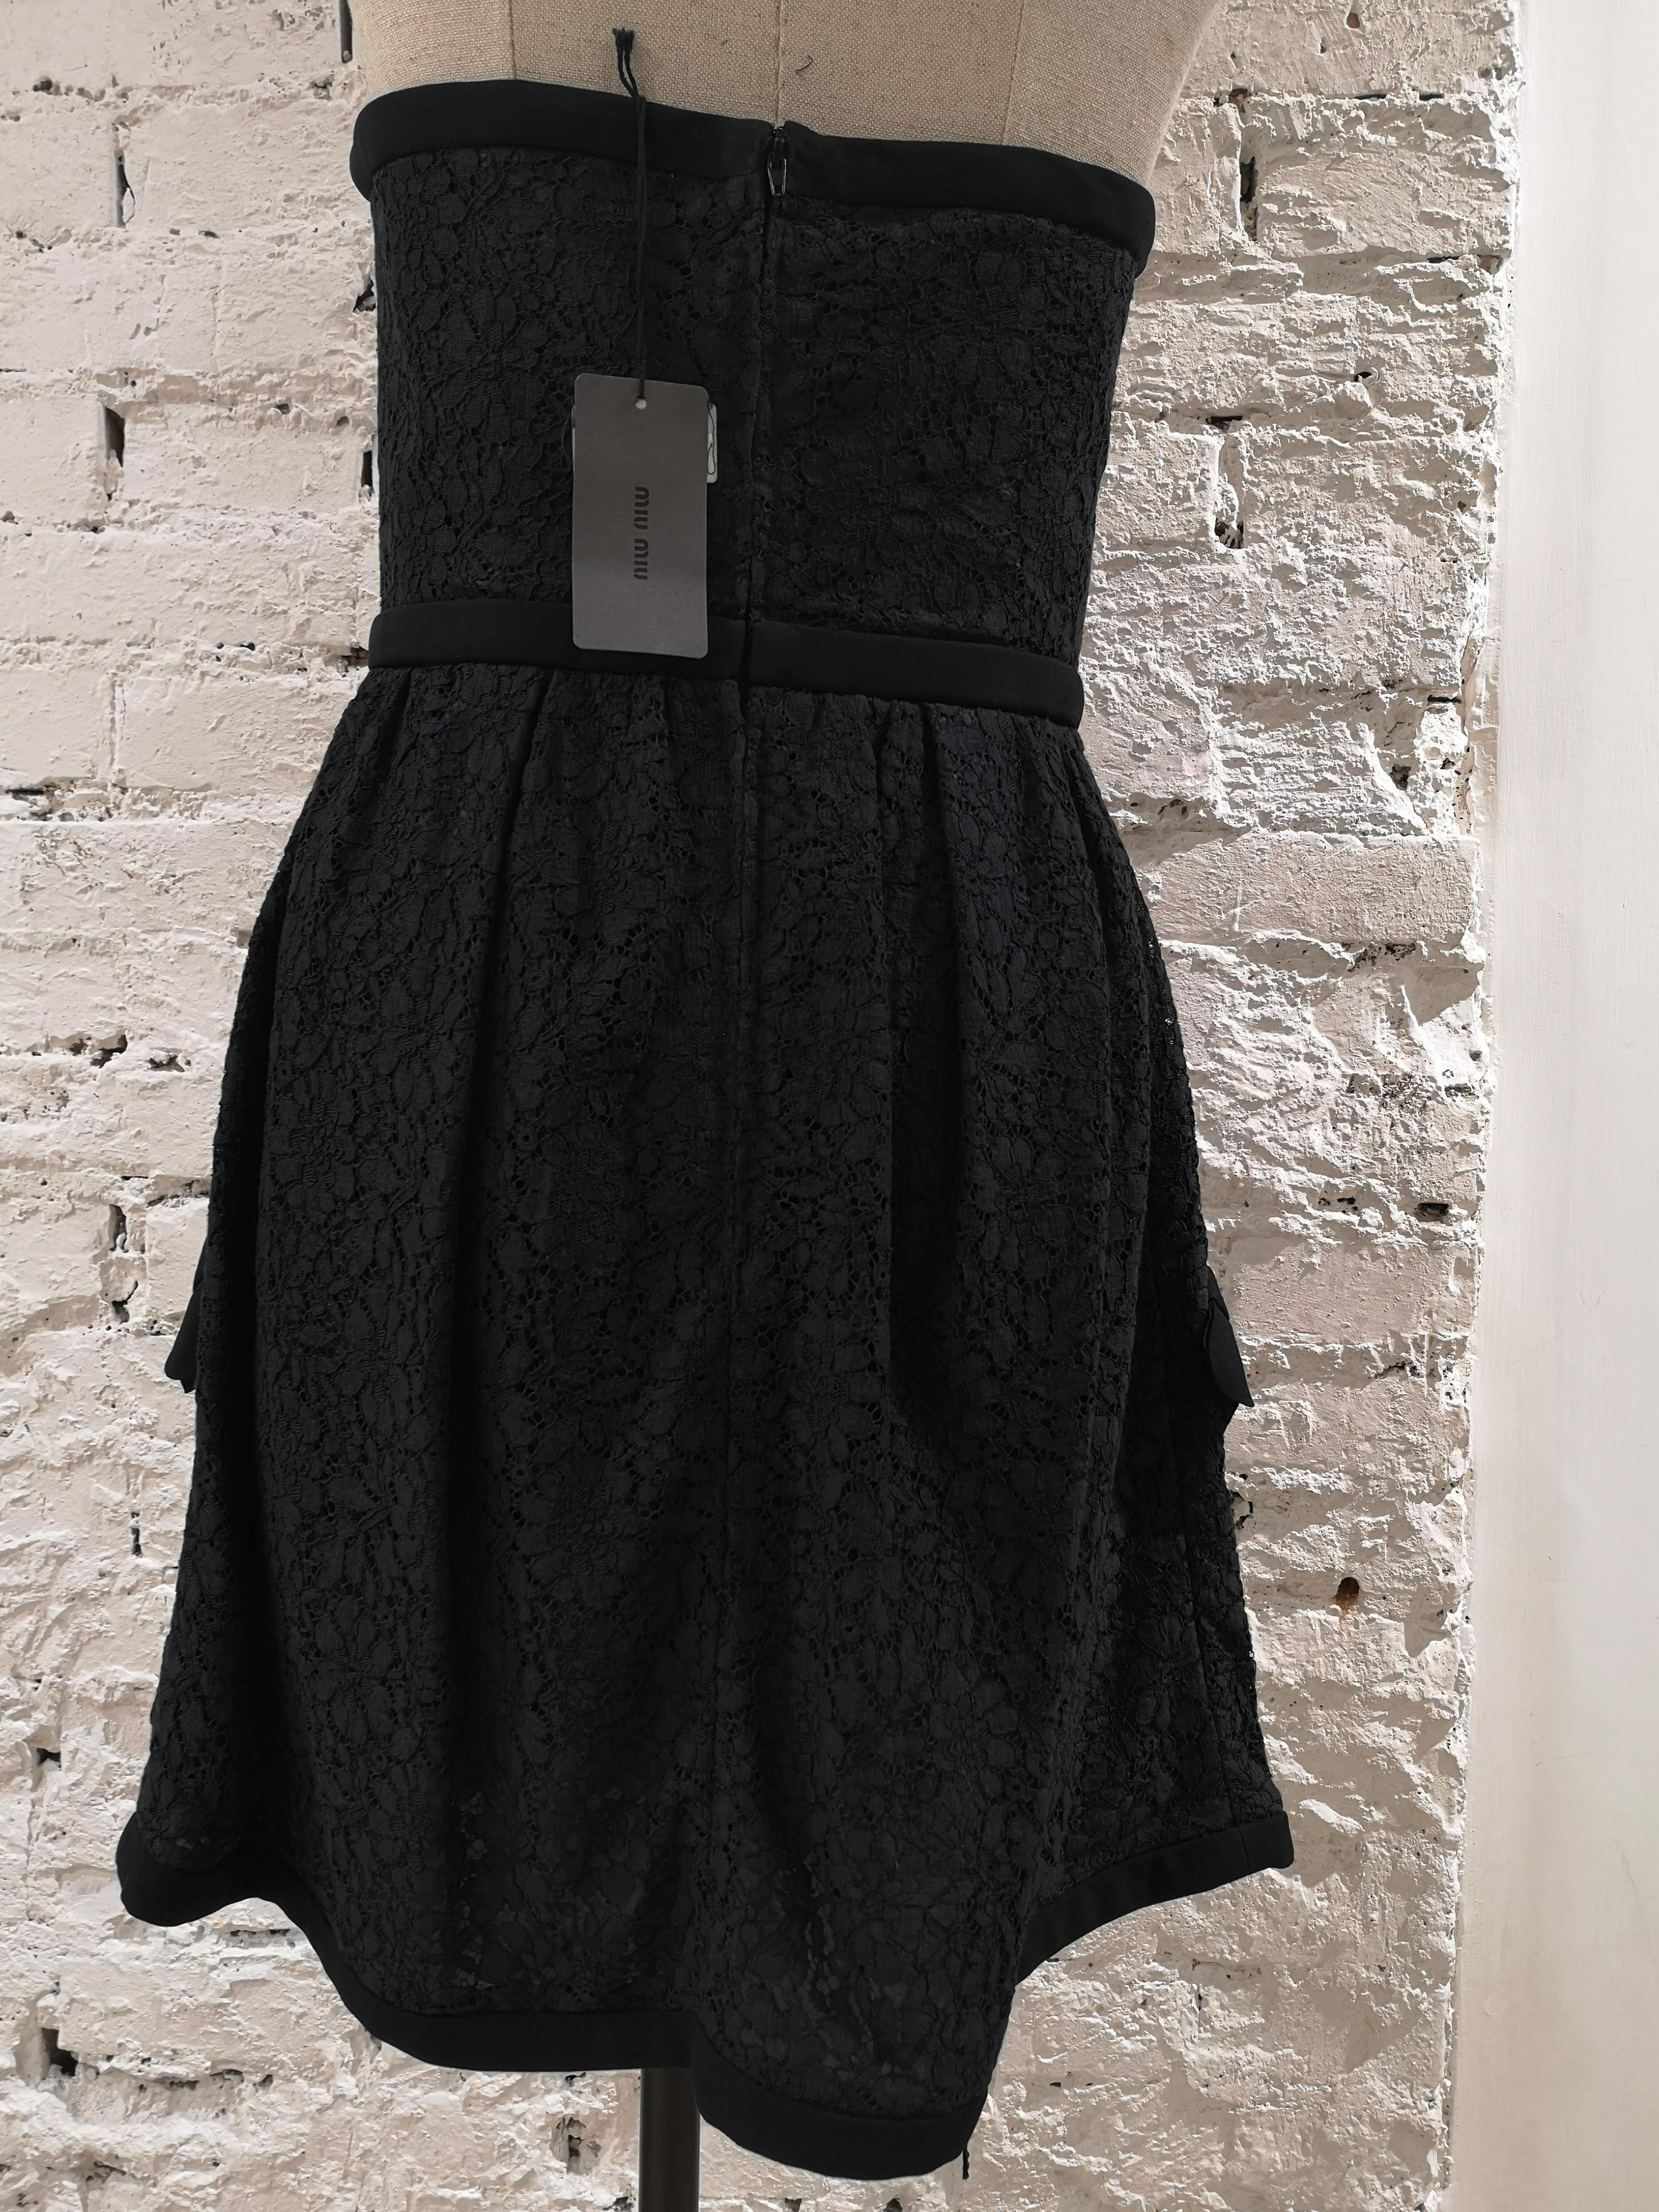 Women's Miu Miu black dress NWOT For Sale